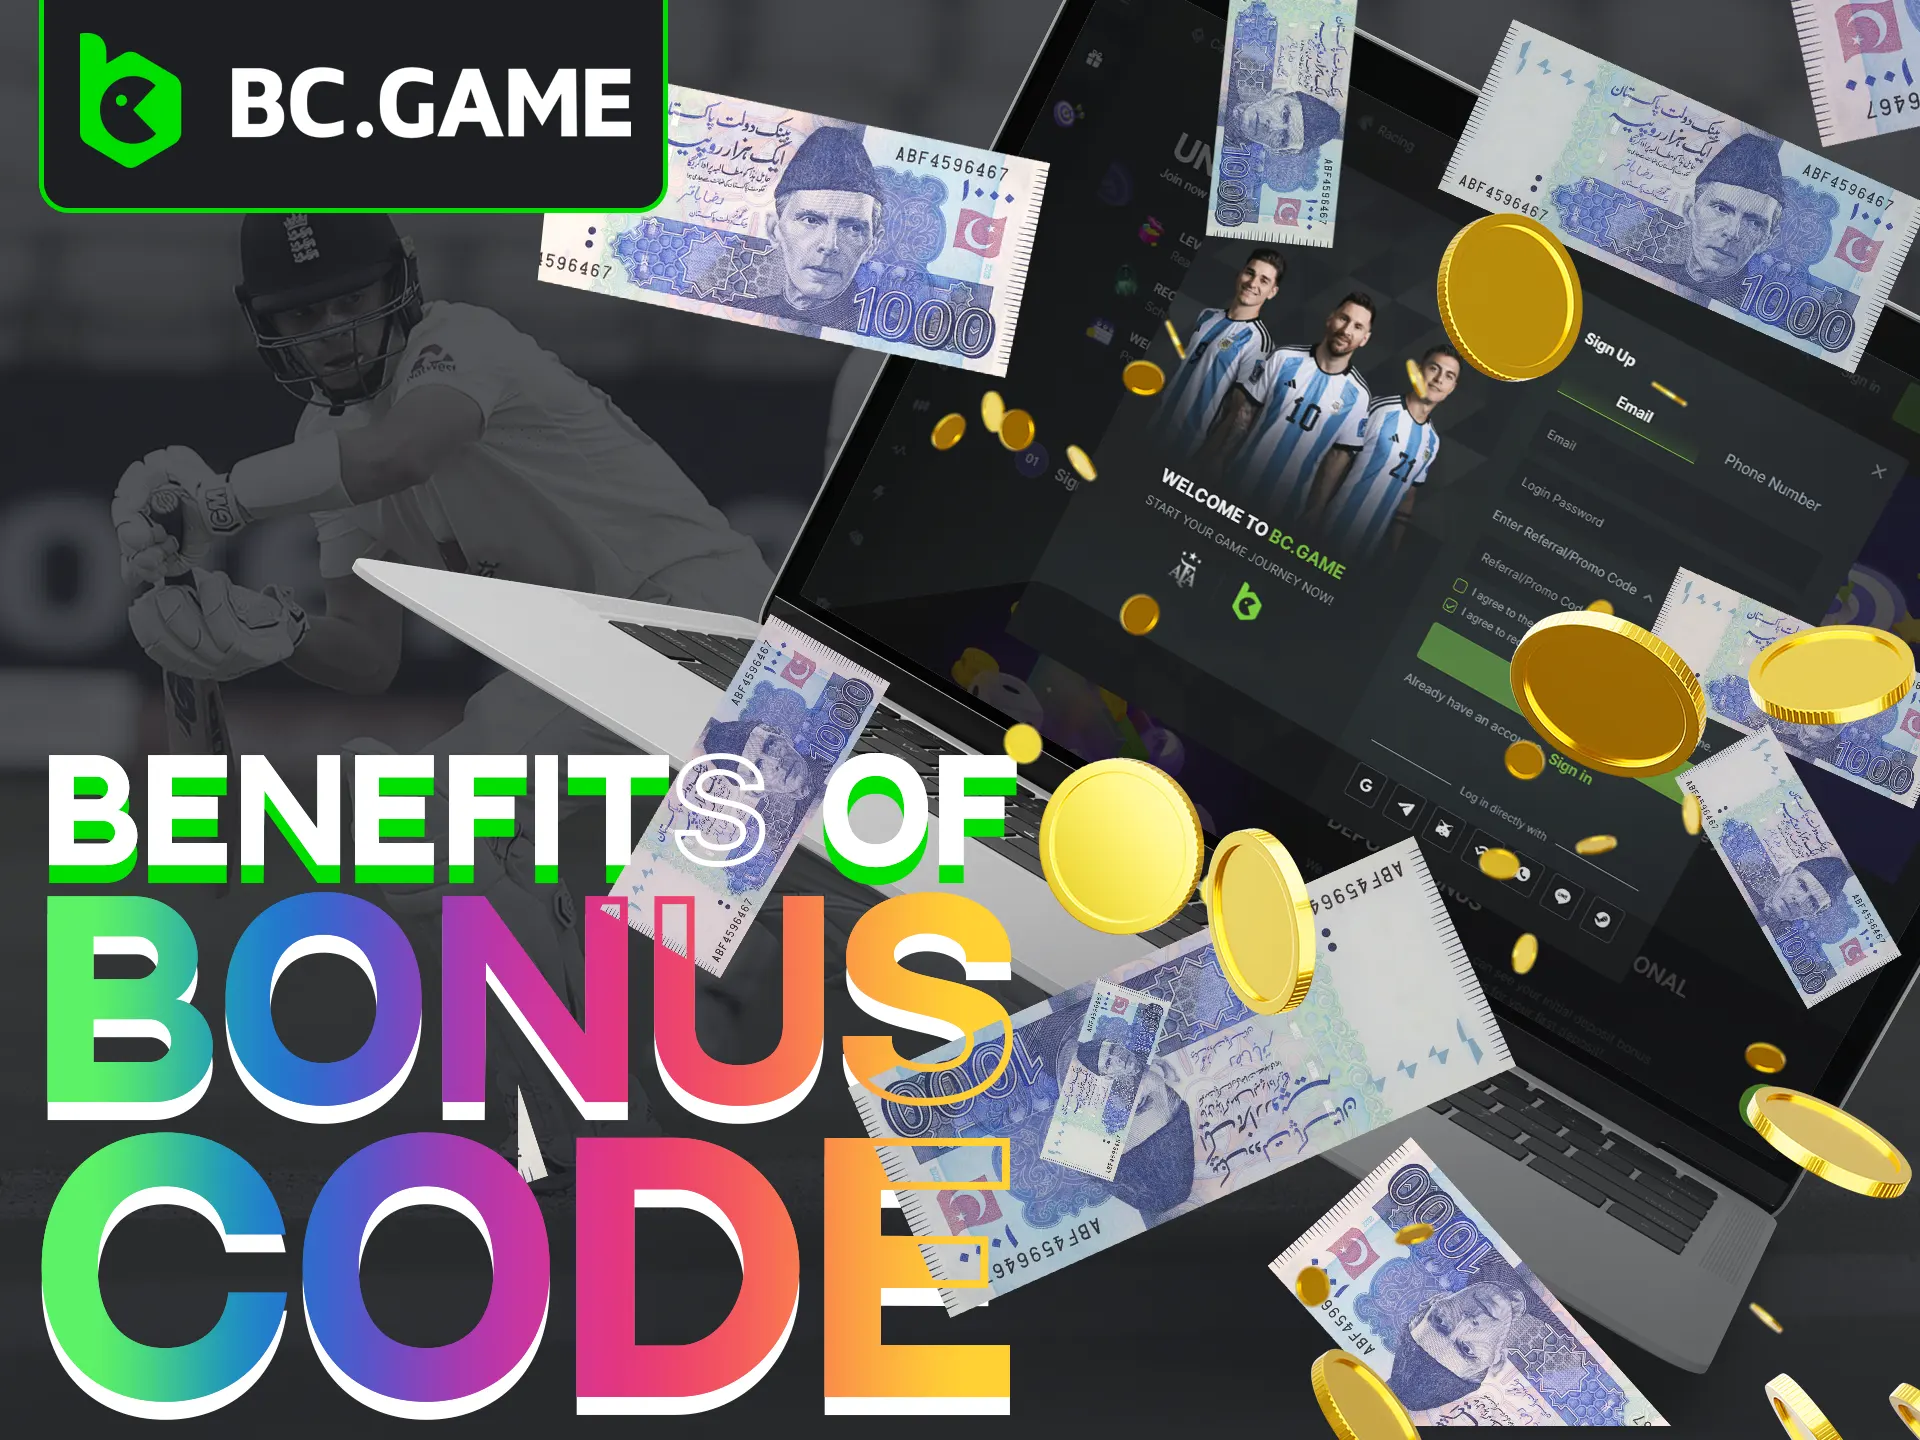 Get bigger bonuses with free BC Game codes.